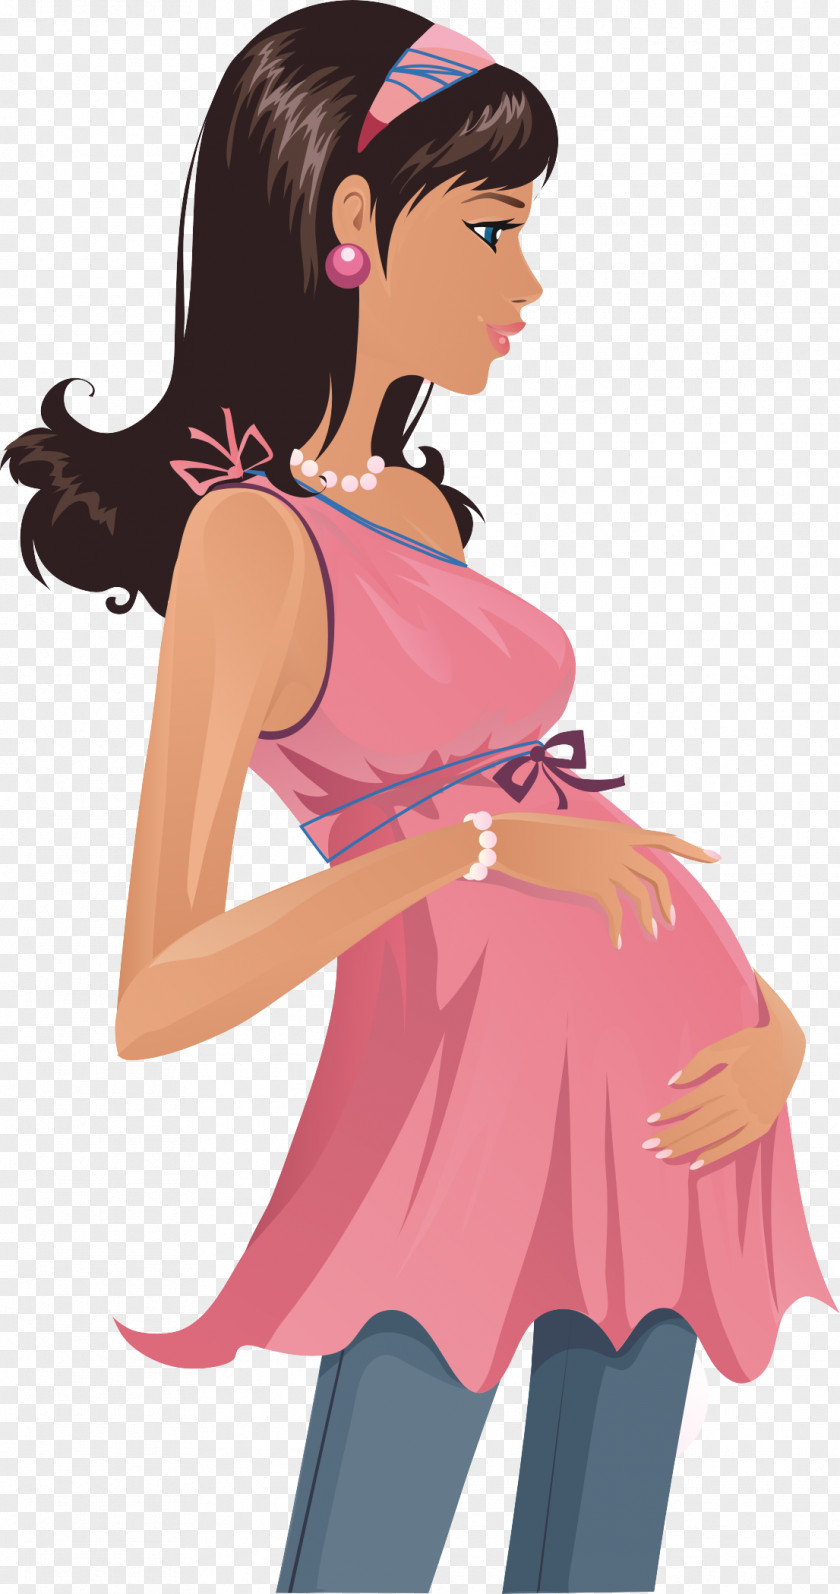 Pregnant Woman Teenage Pregnancy Test PNG